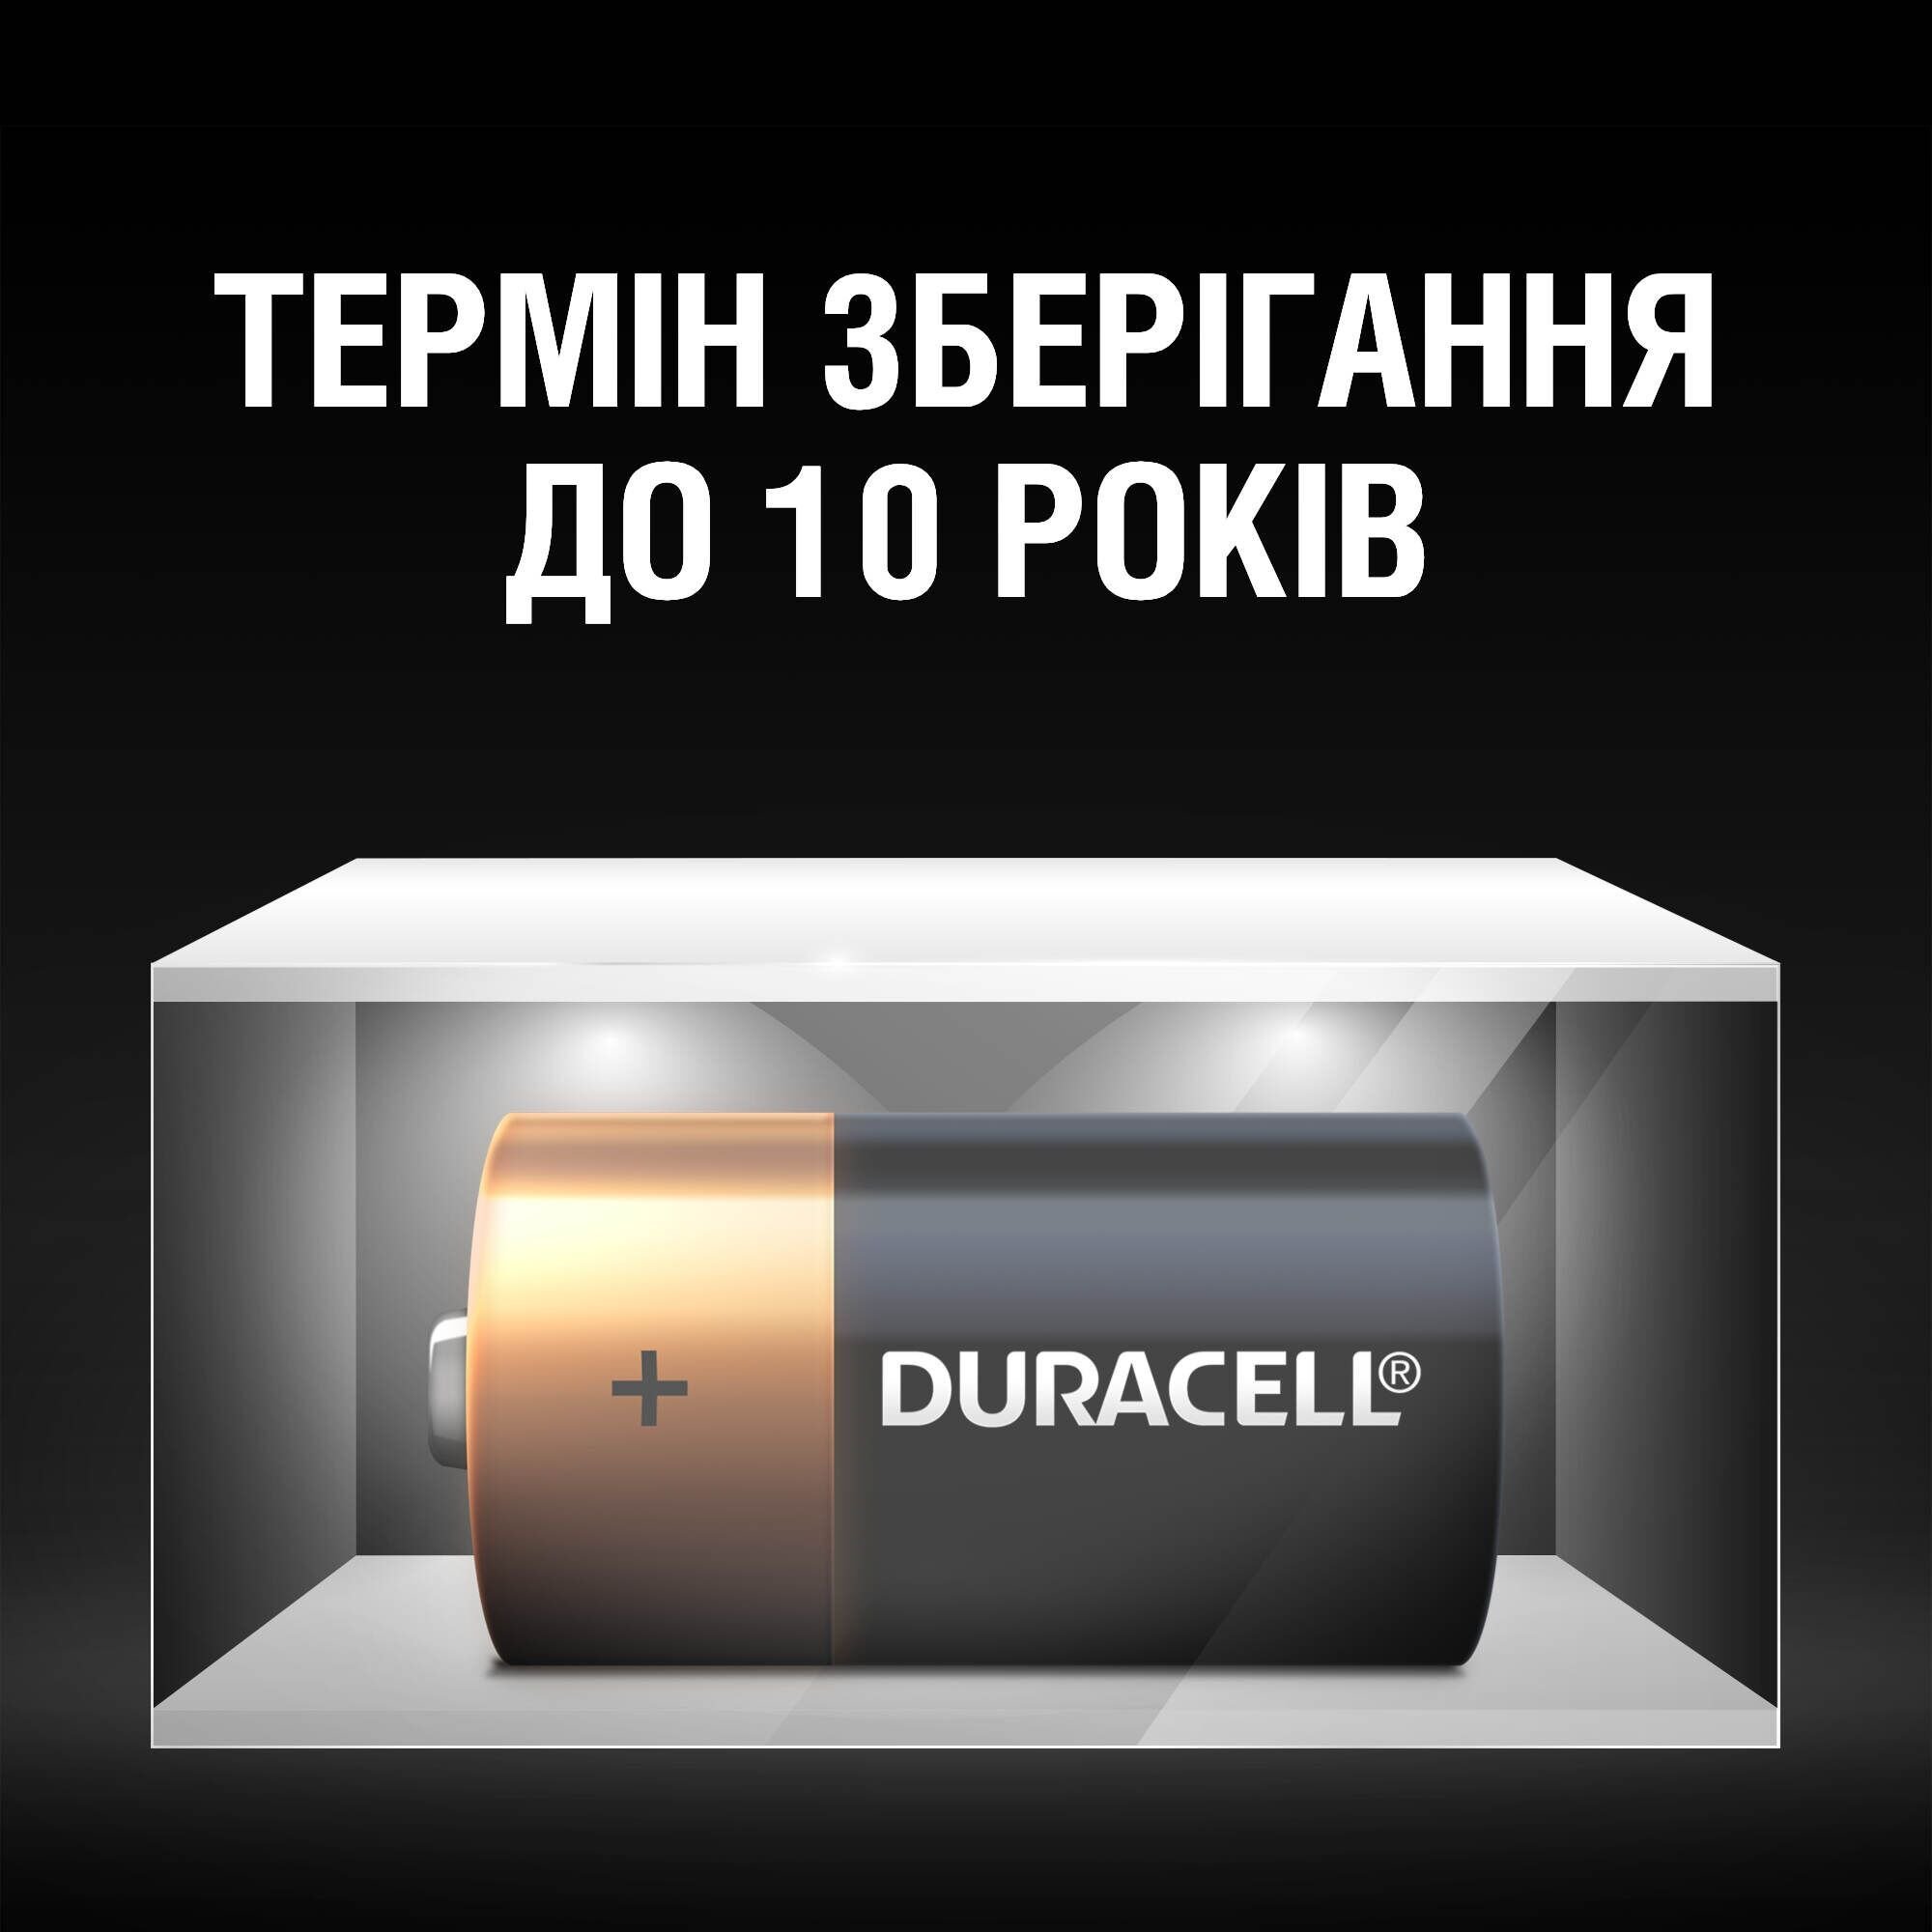 Щелочные батарейки Duracell 1.5 V C LR14/MN1400, 2 шт. (706009) - фото 6